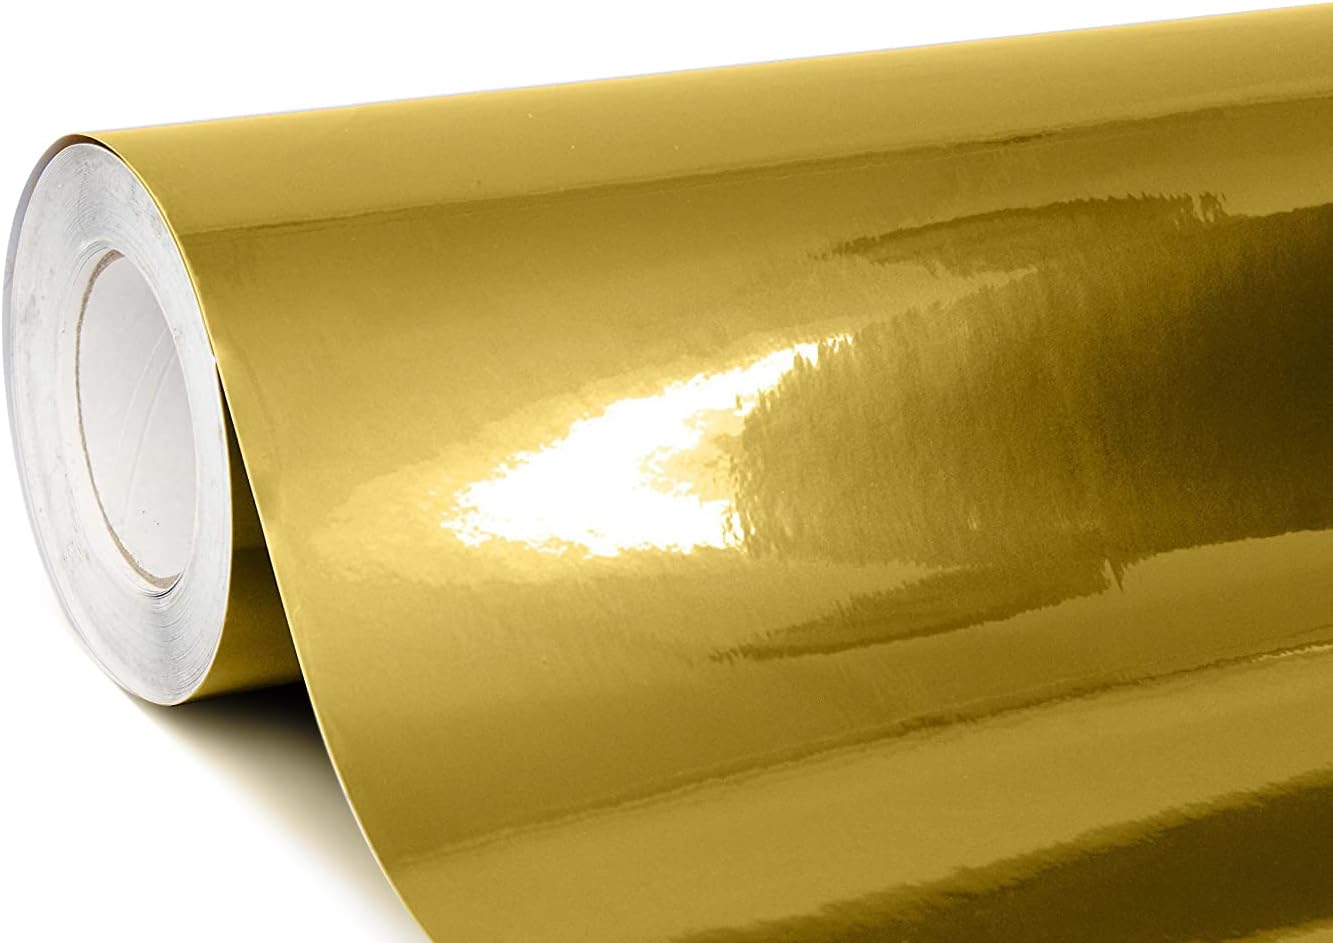 VViViD Liquid Metallic Yellow Gold Vinyl Wrap Roll 1 Foot x 5 Feet Automotive Air-Release Adhesive DIY Decal Sheet